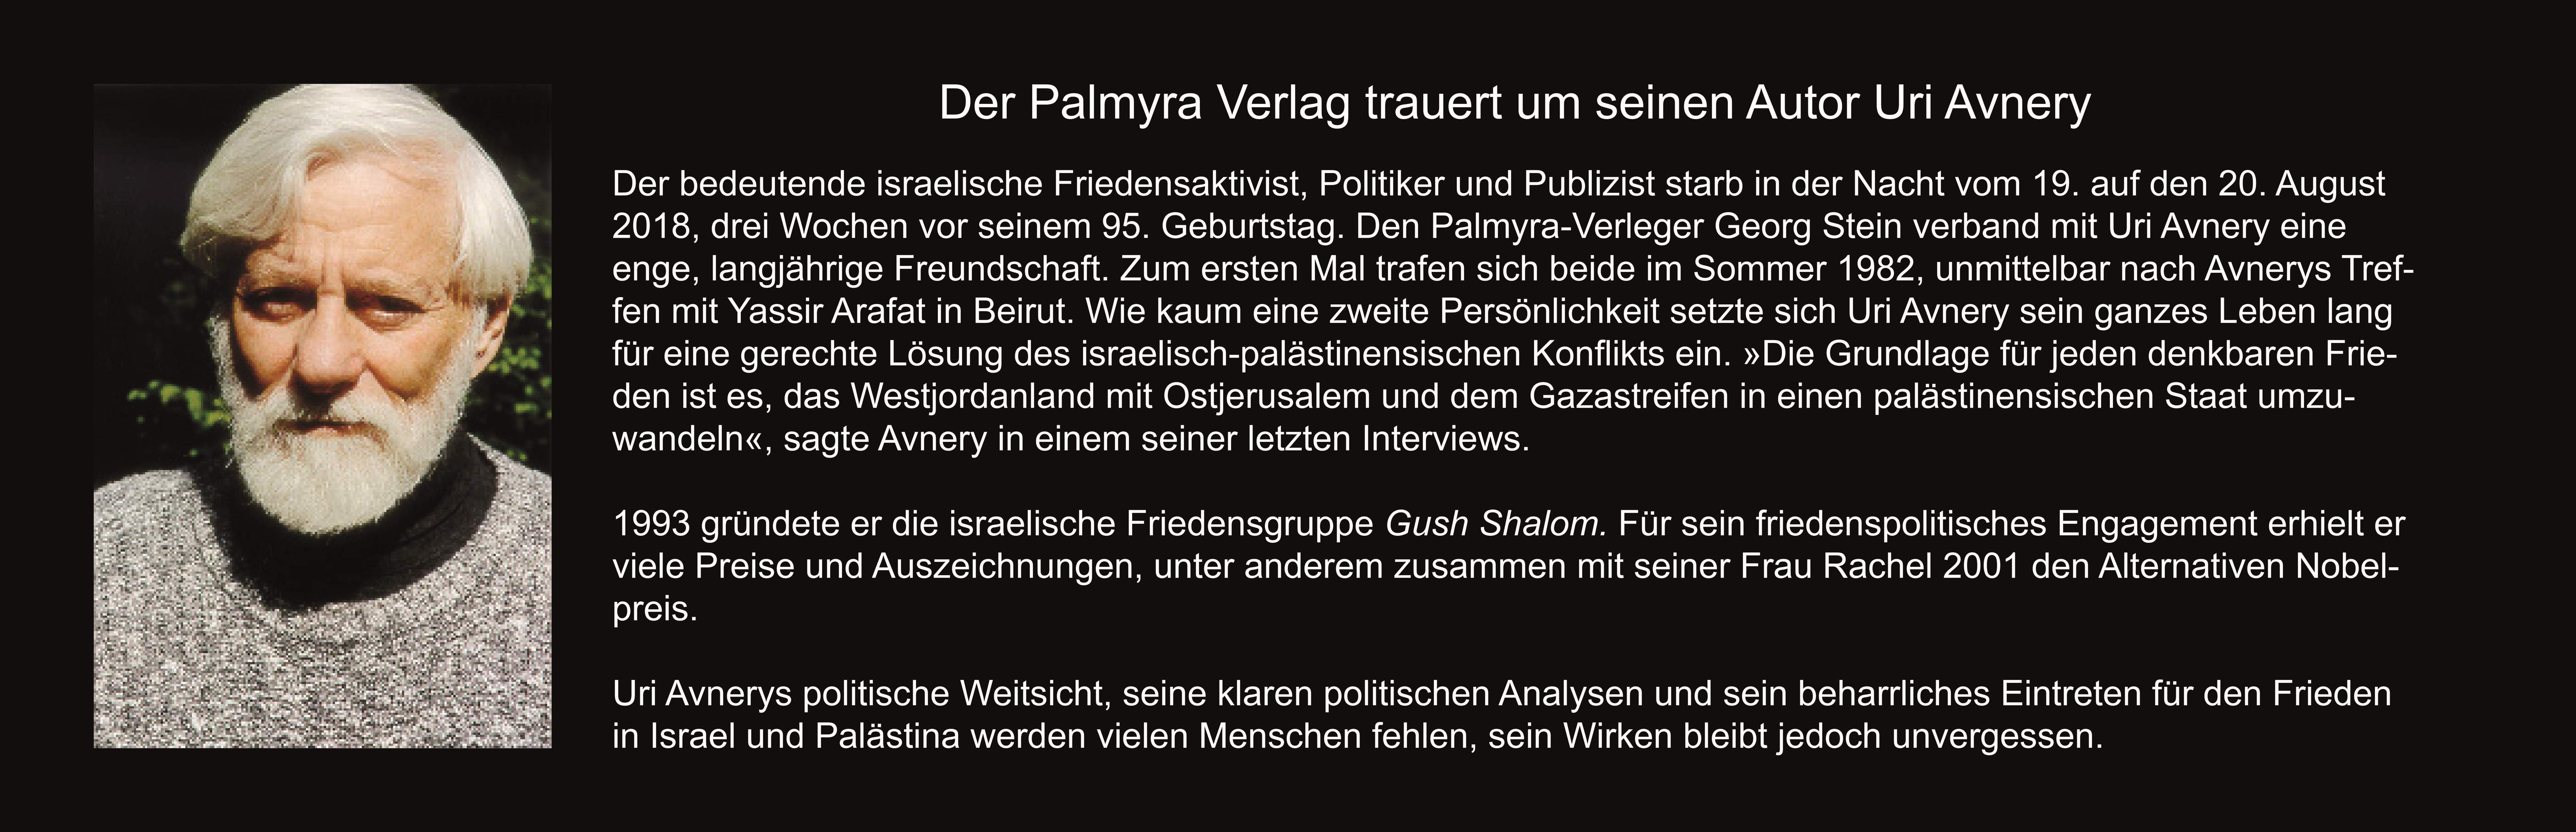 Der Palmyra Verlag trauert um Uri Avnery